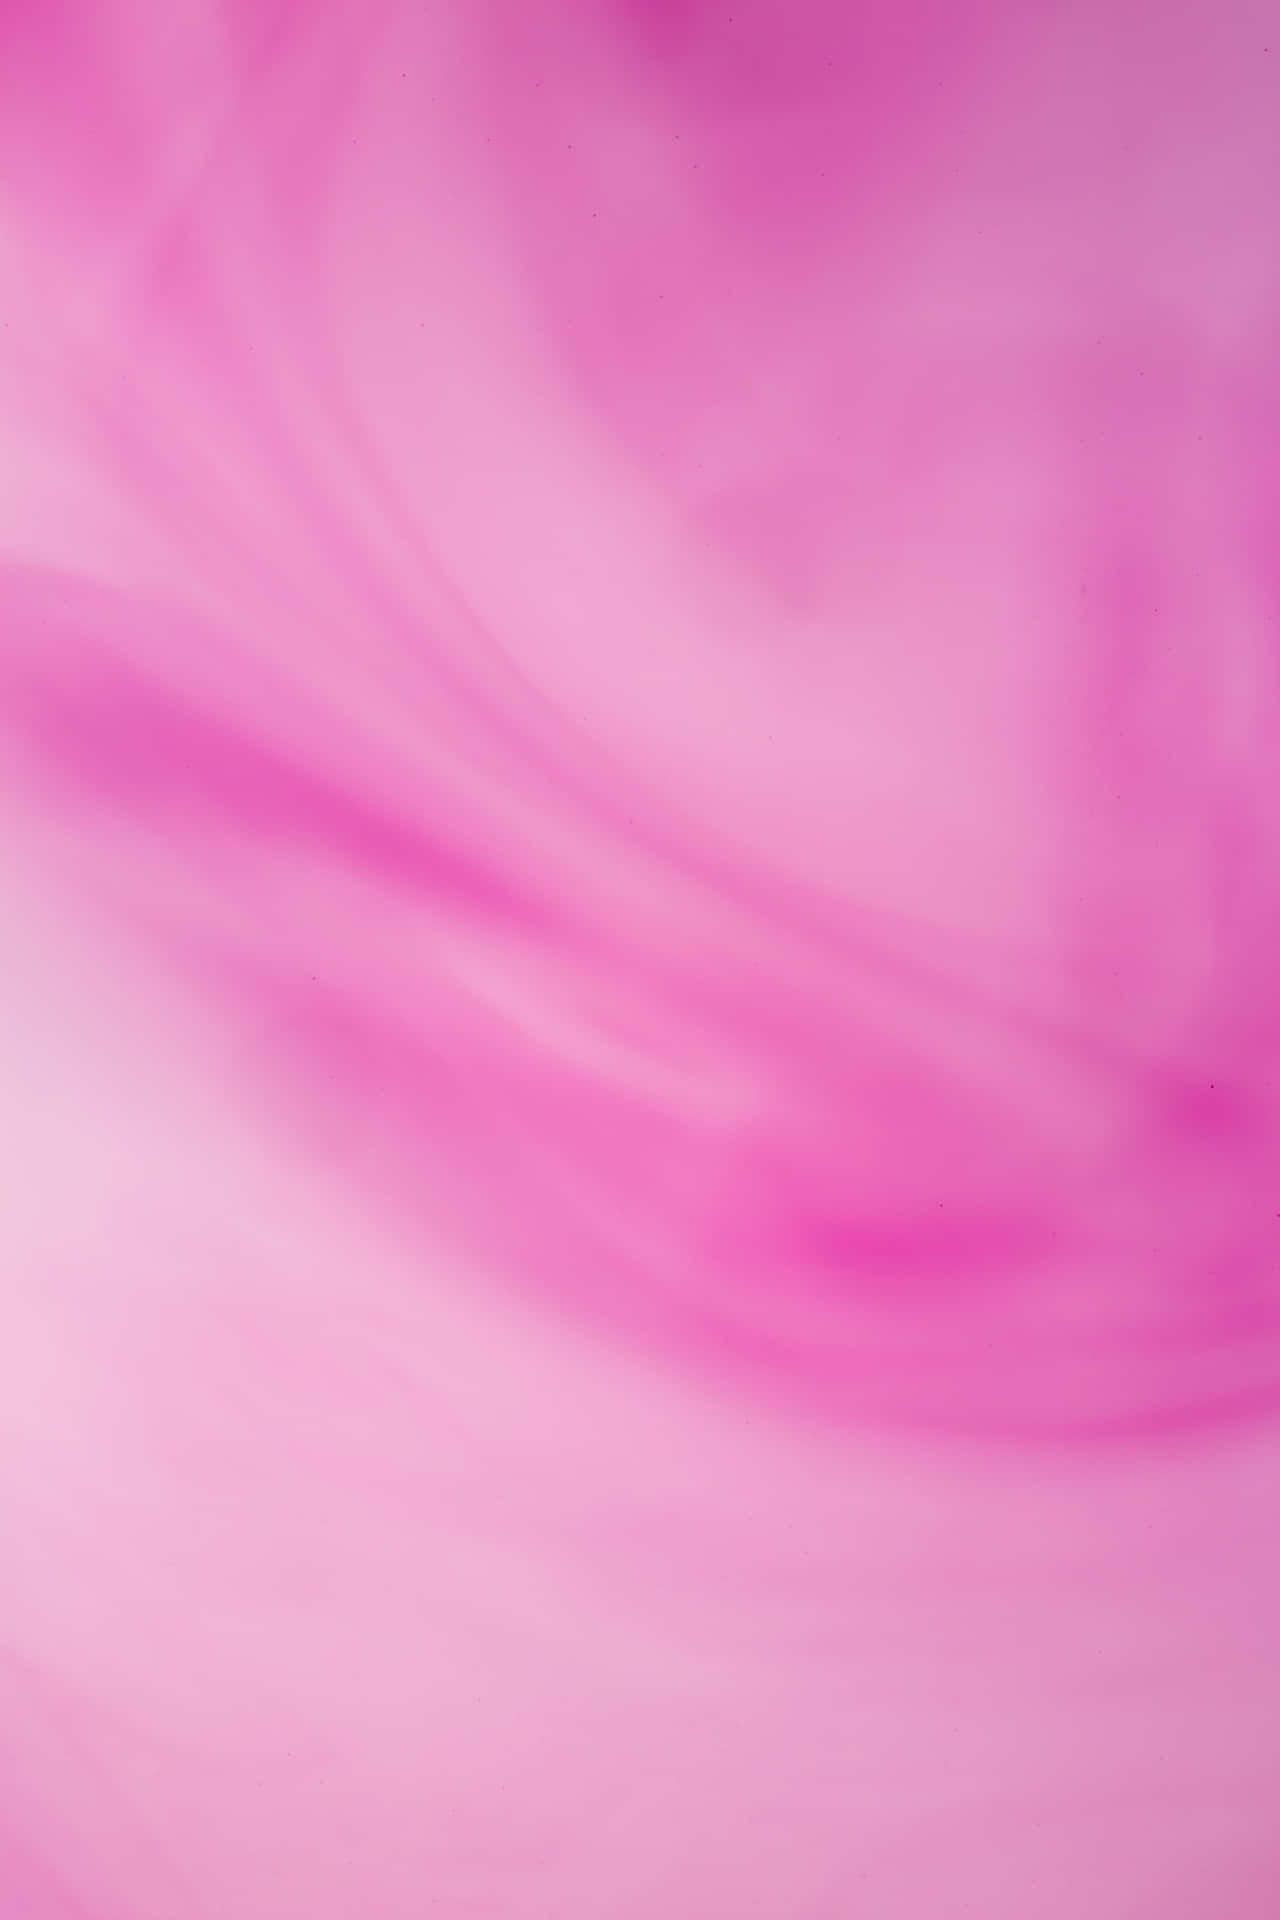 Pink Gradient Backgrounds